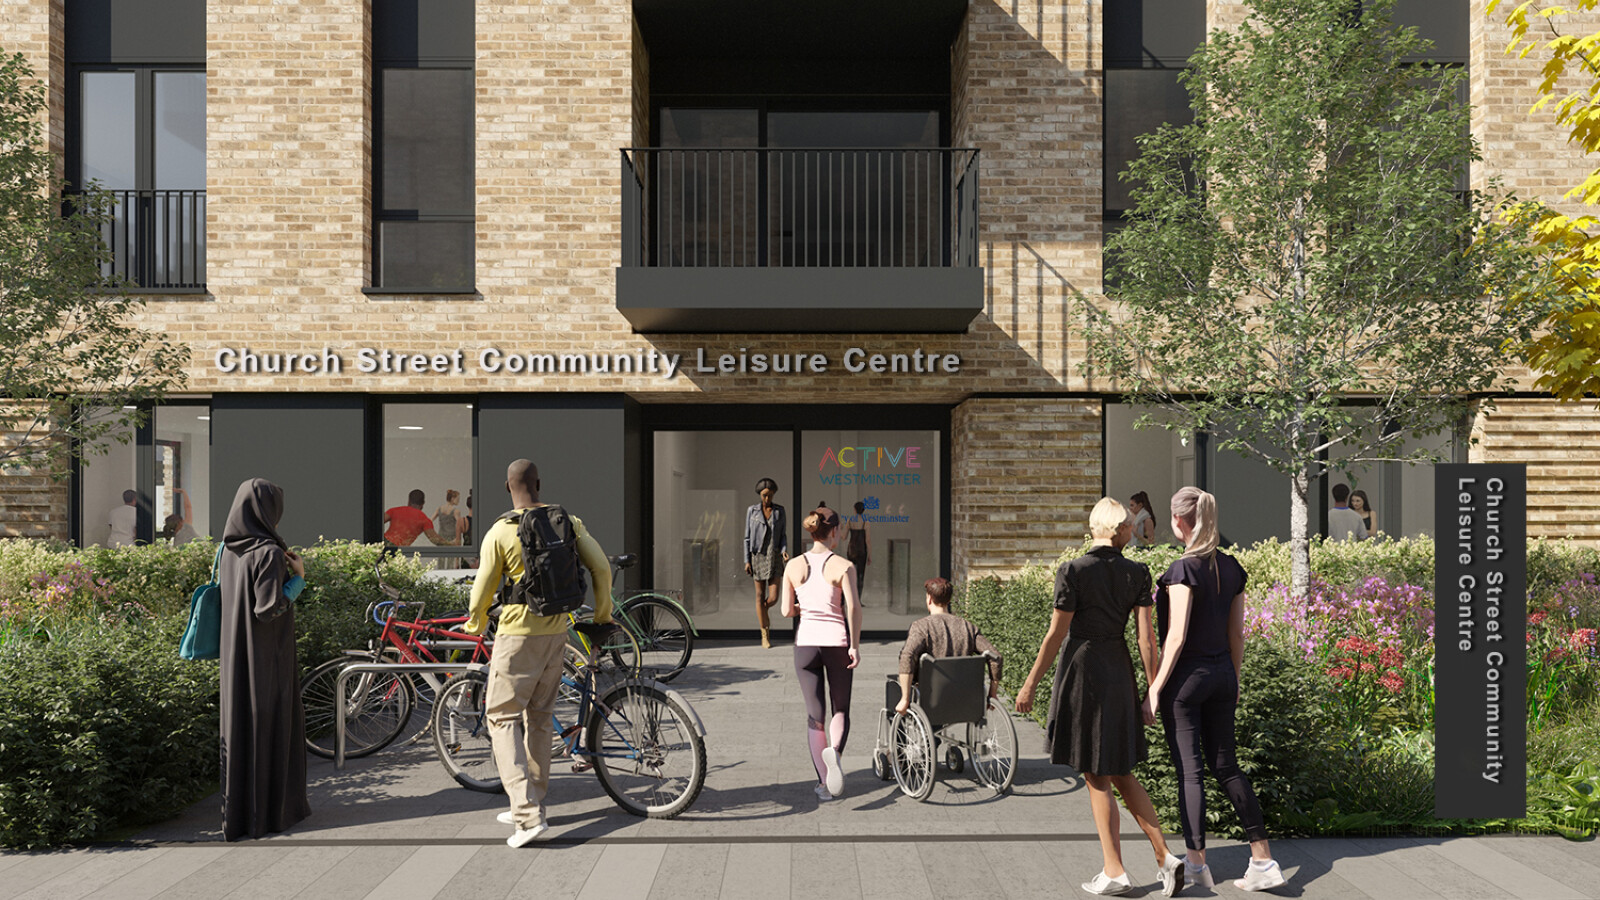 Community leisure centre CGI